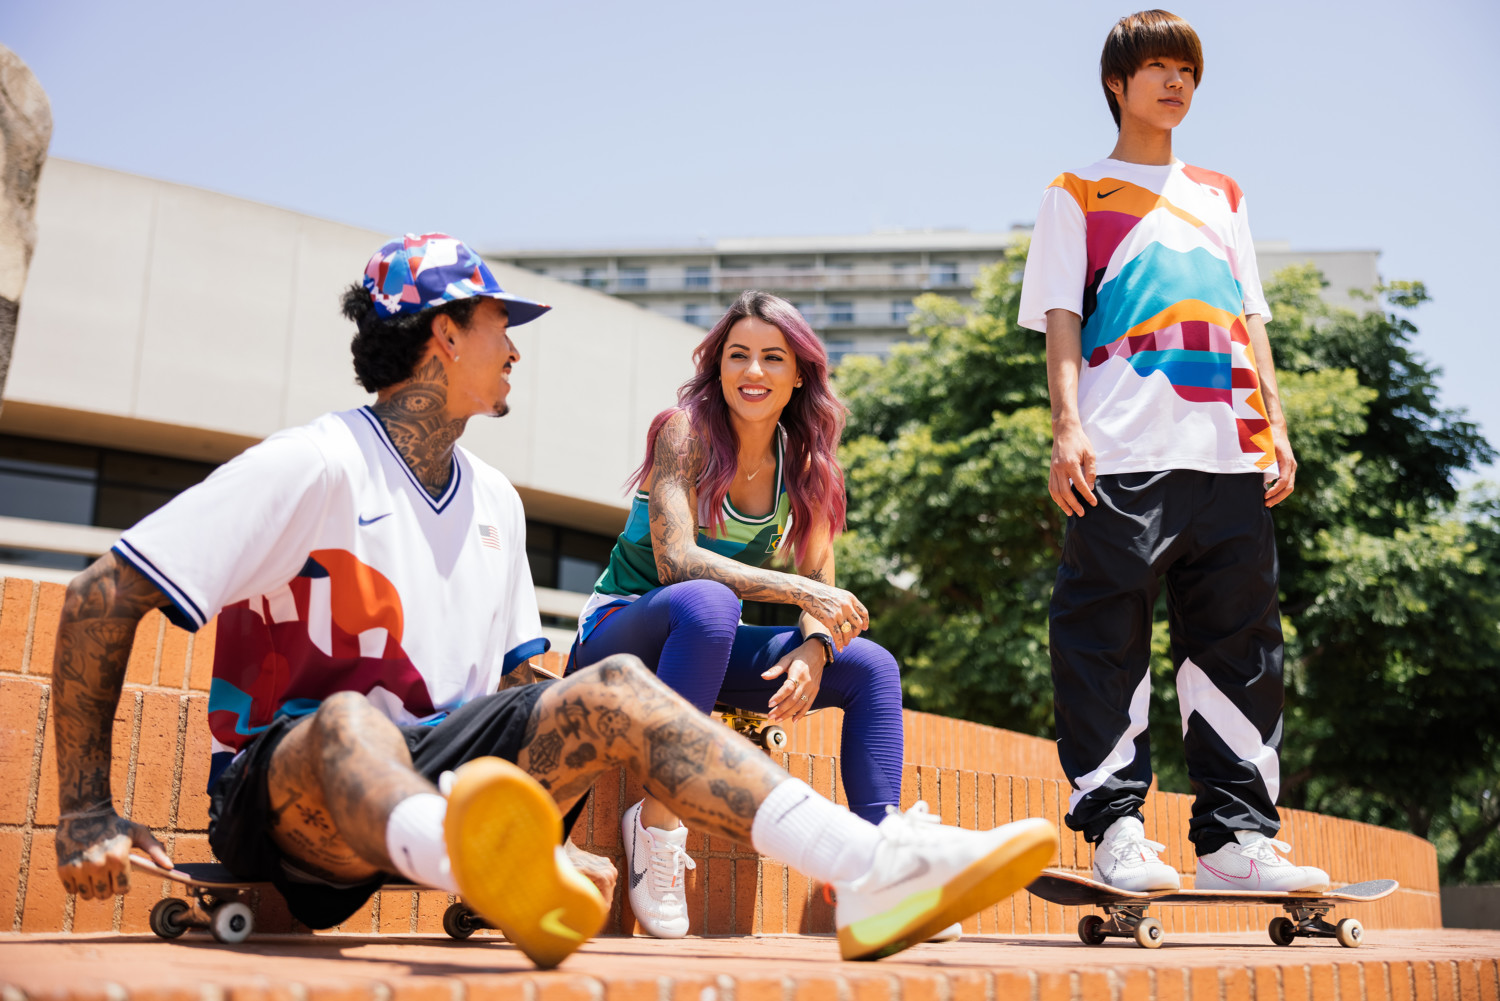 Nike's colorful Olympic skateboarding uniforms